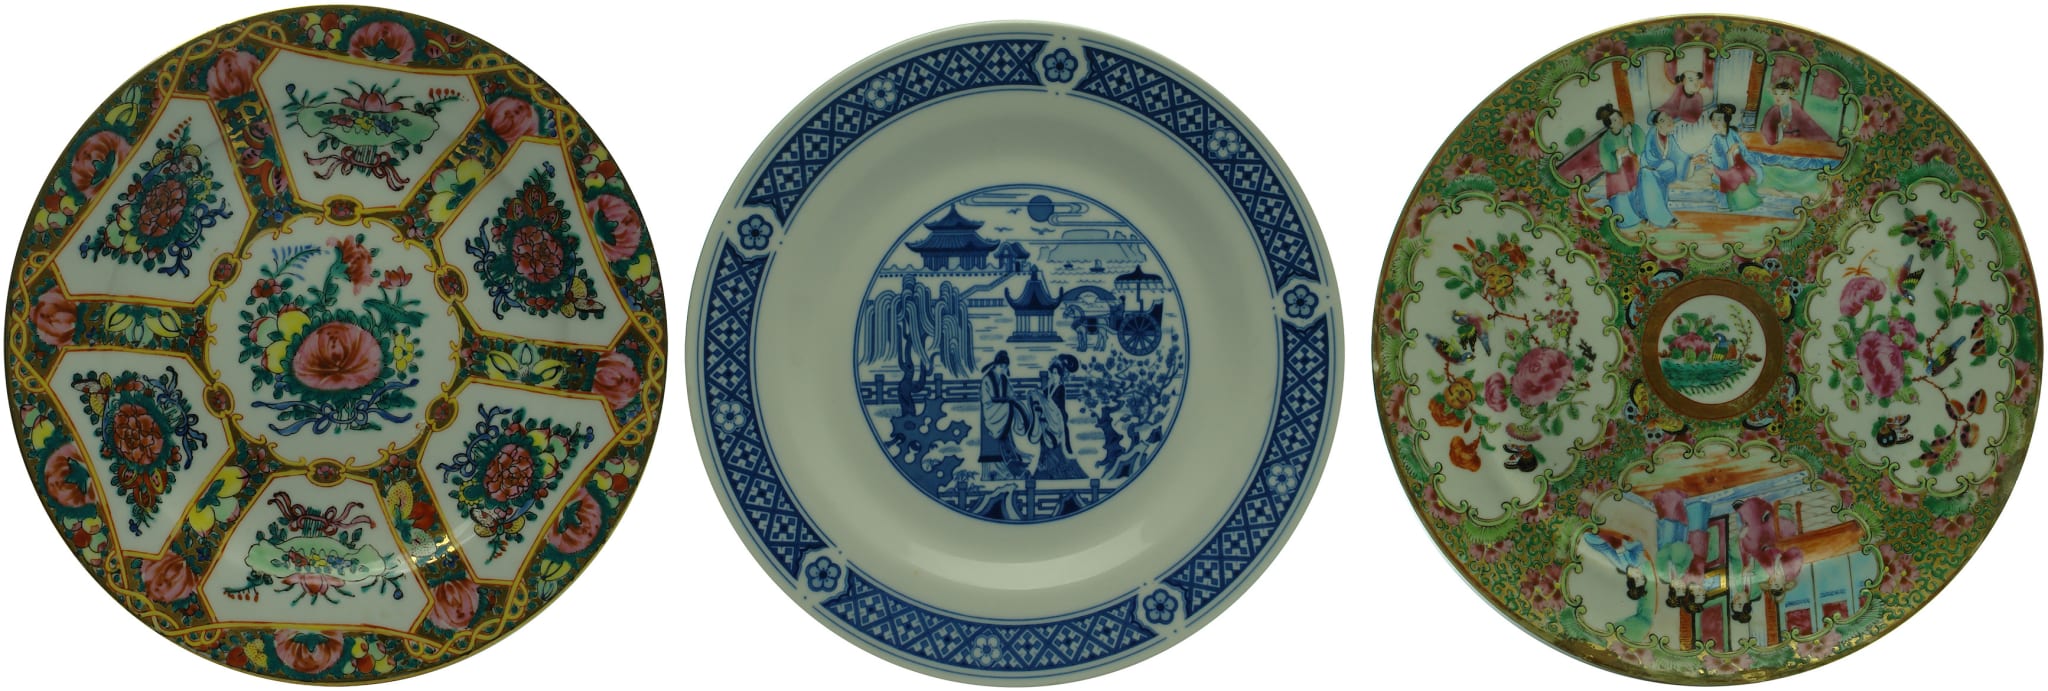 Chinese style ceramic plates